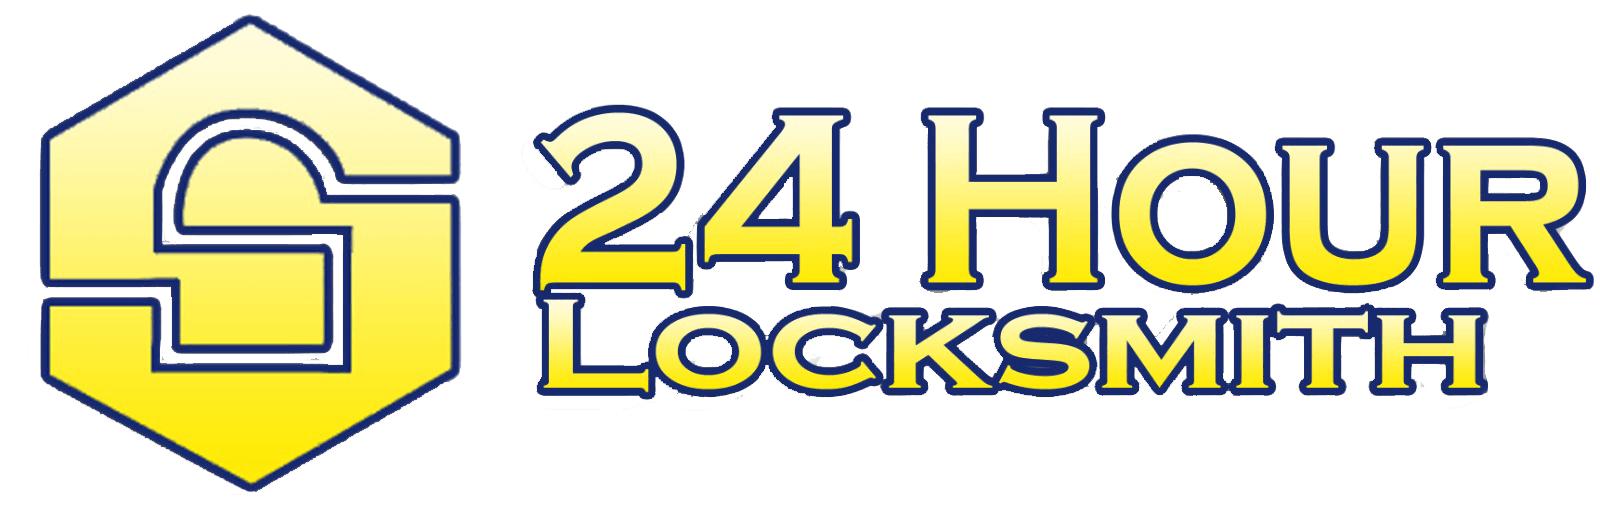 24 Hour Locksmith in Irvine, CA